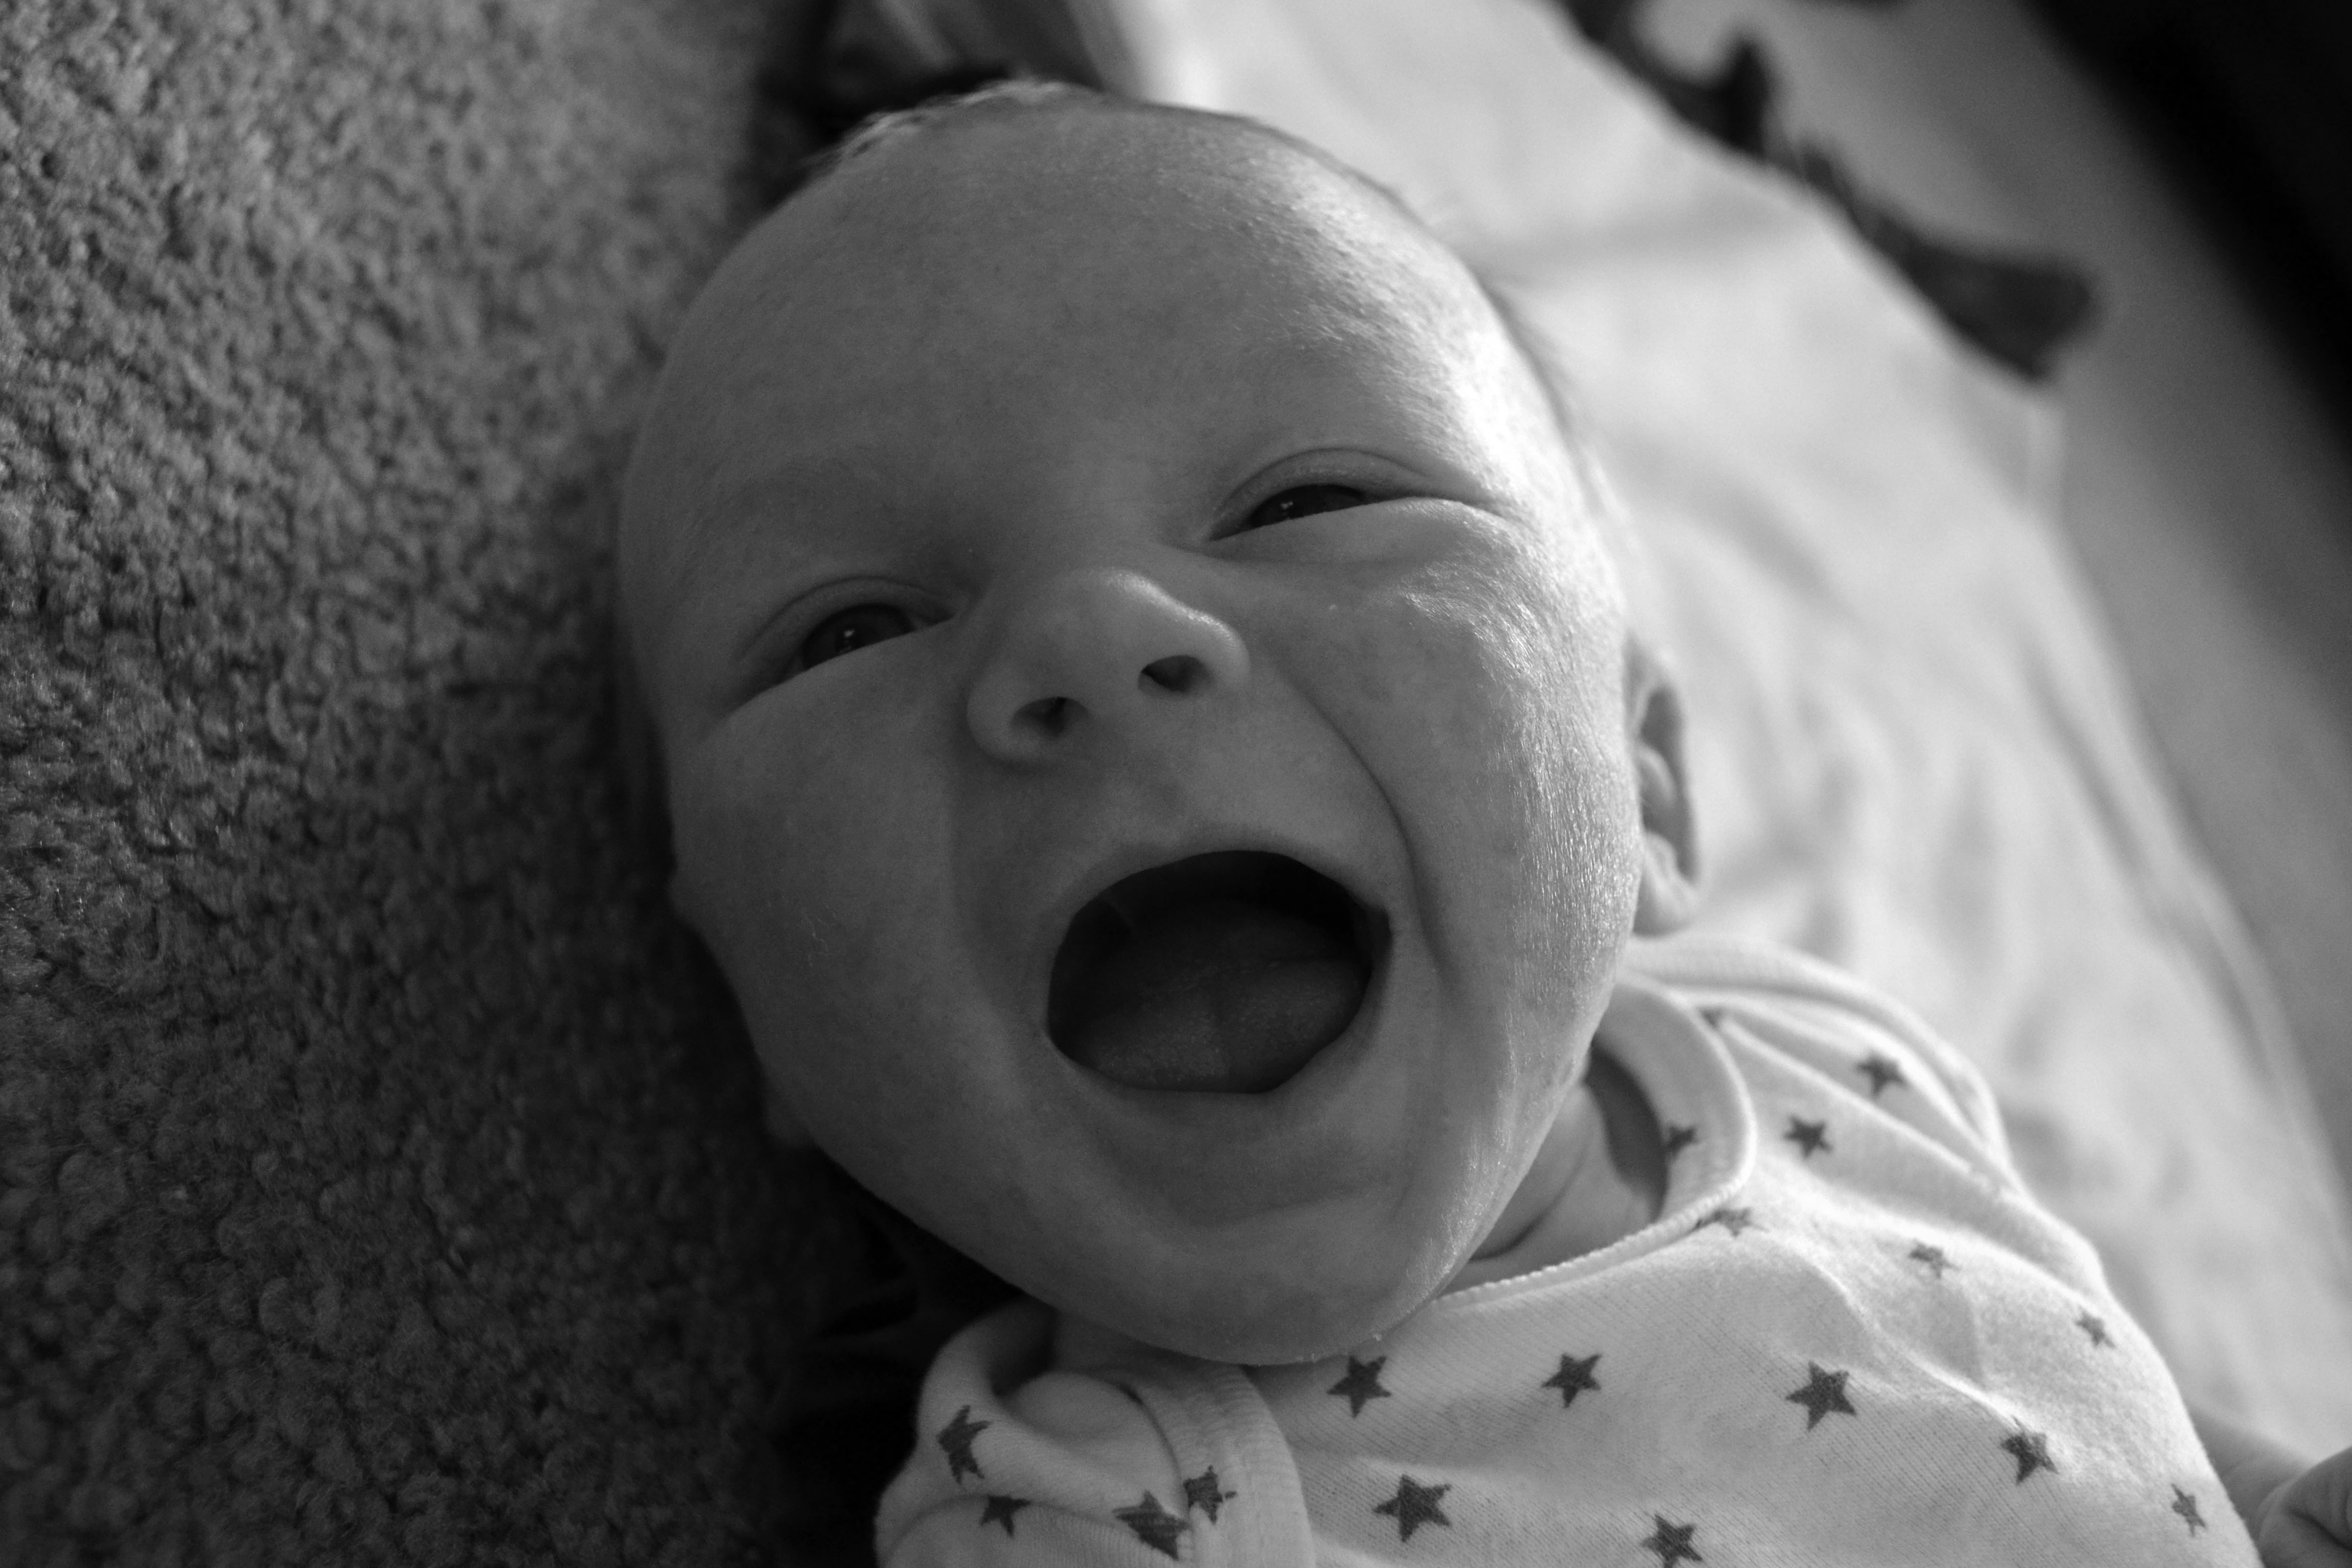 Newborn baby boy smiles